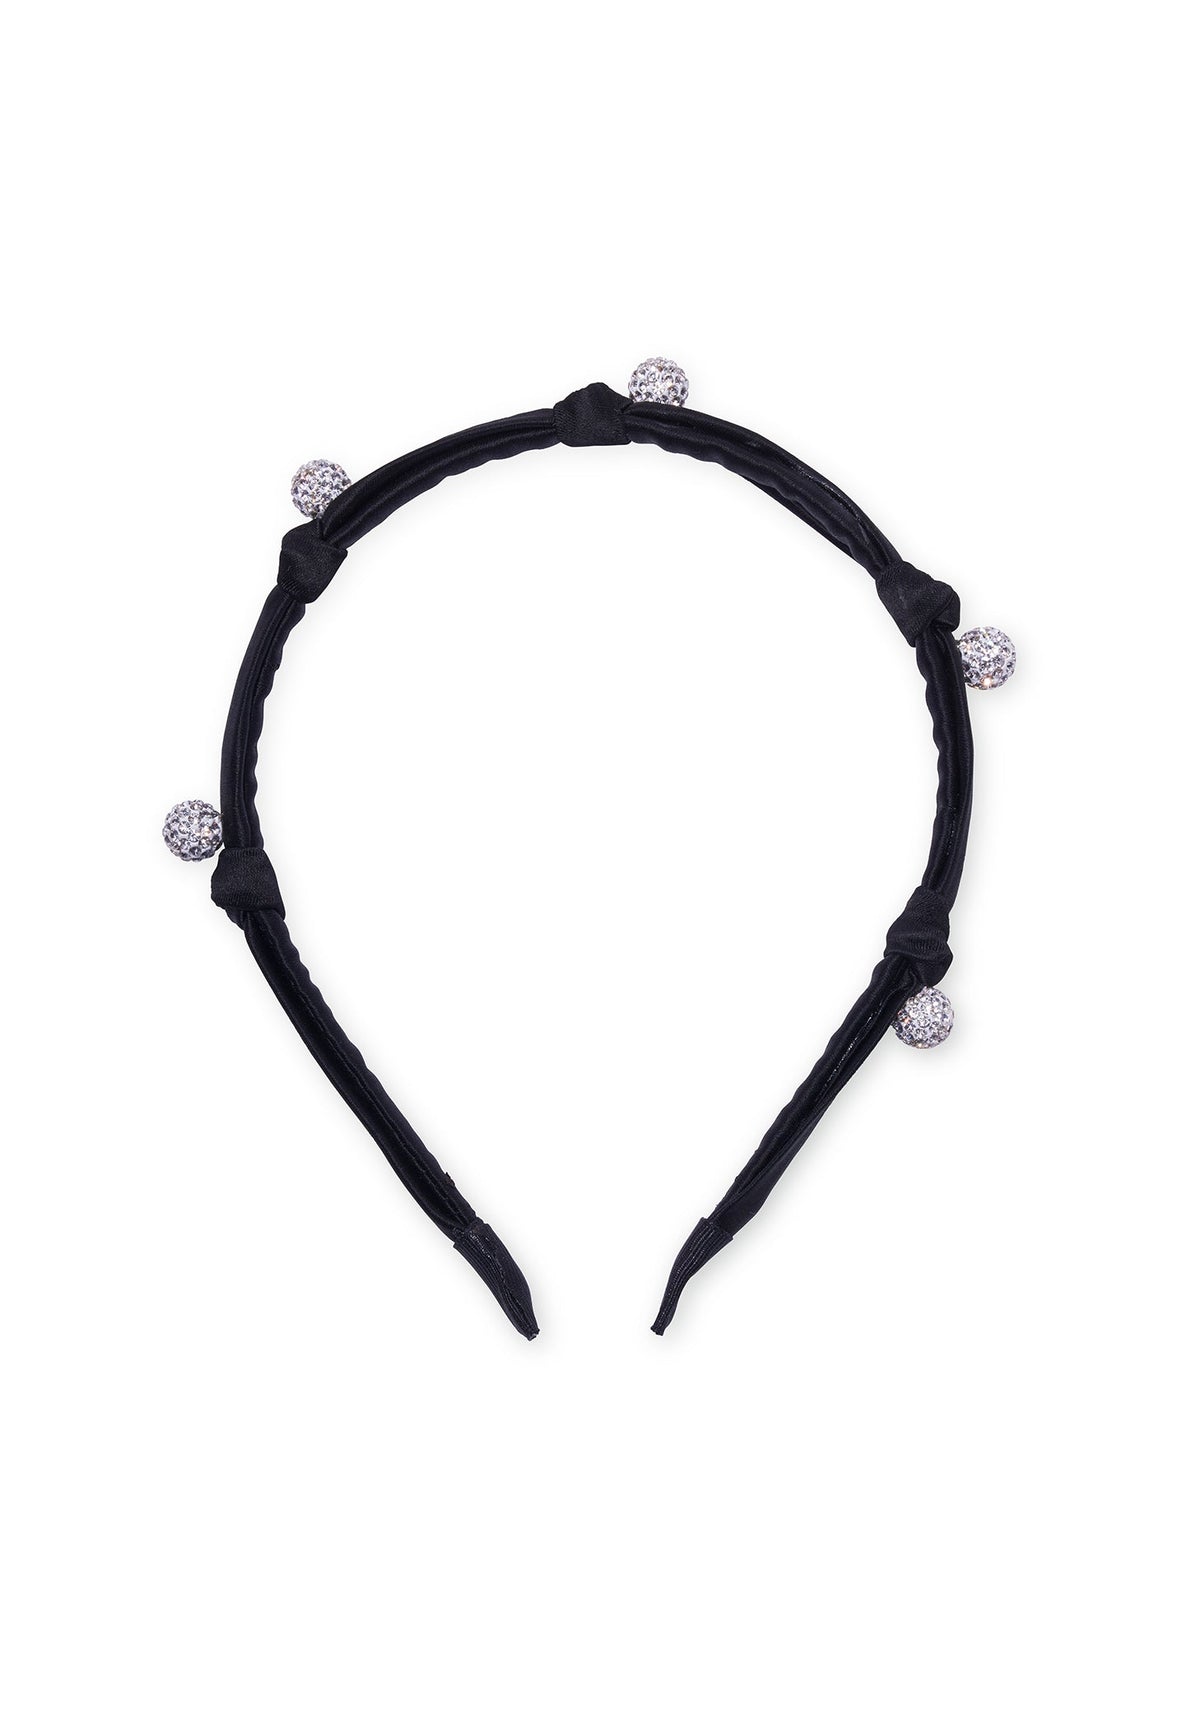 Crystal Skinny Headband in Black